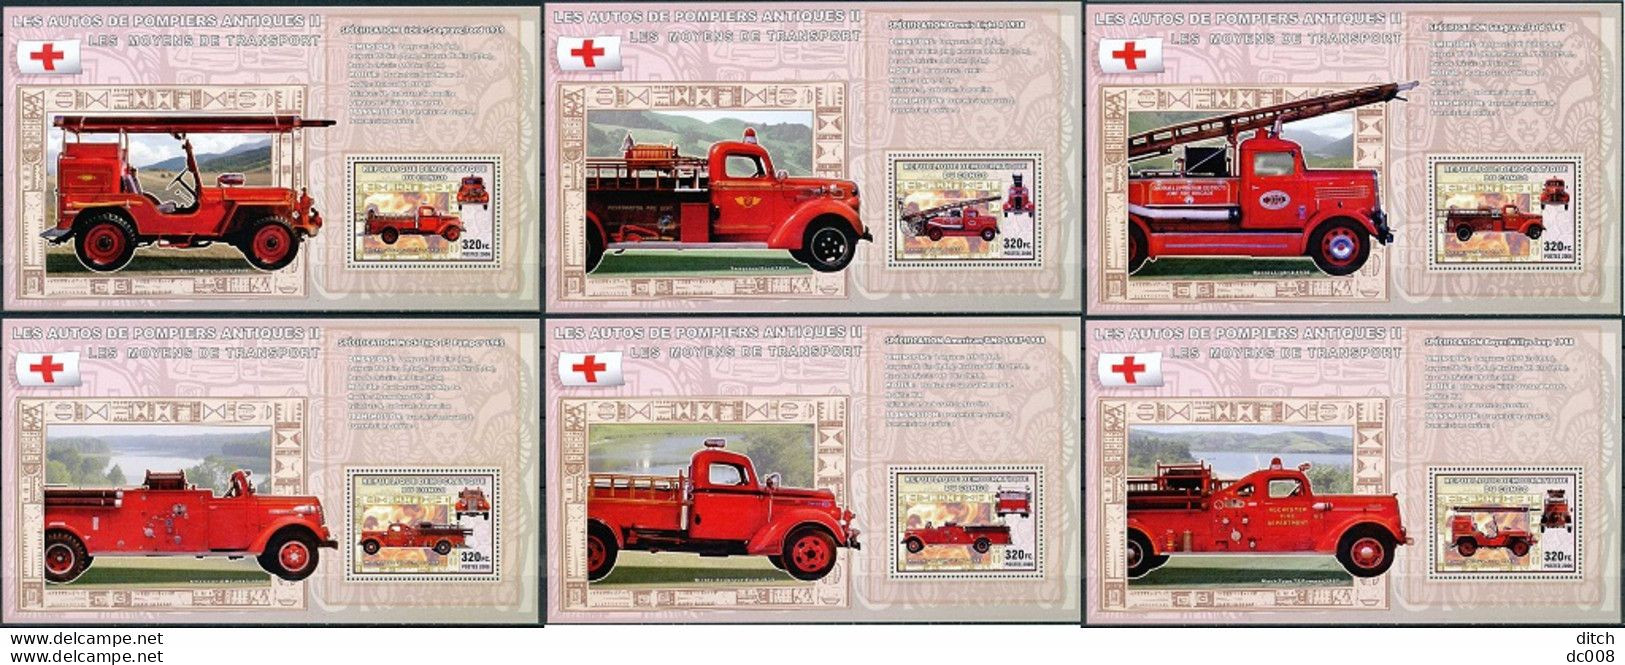 2006 Les Autos De Pompiers Antiques II - Complet-volledig 7 Blocs - Ungebraucht